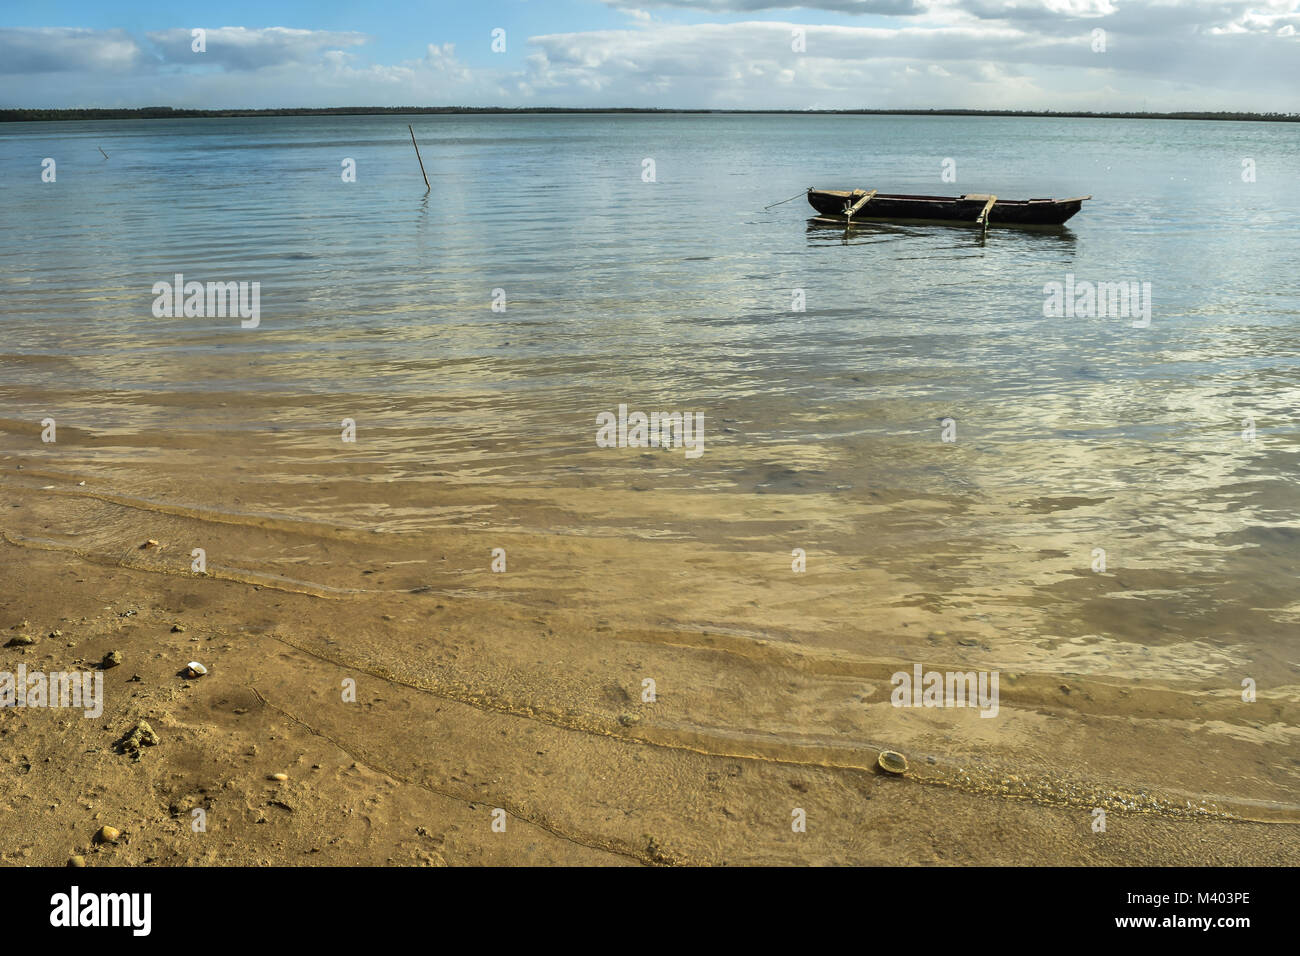 Traditional fishing boat sitting on calm clear water, Tongatapu, Tonga Stock Photo